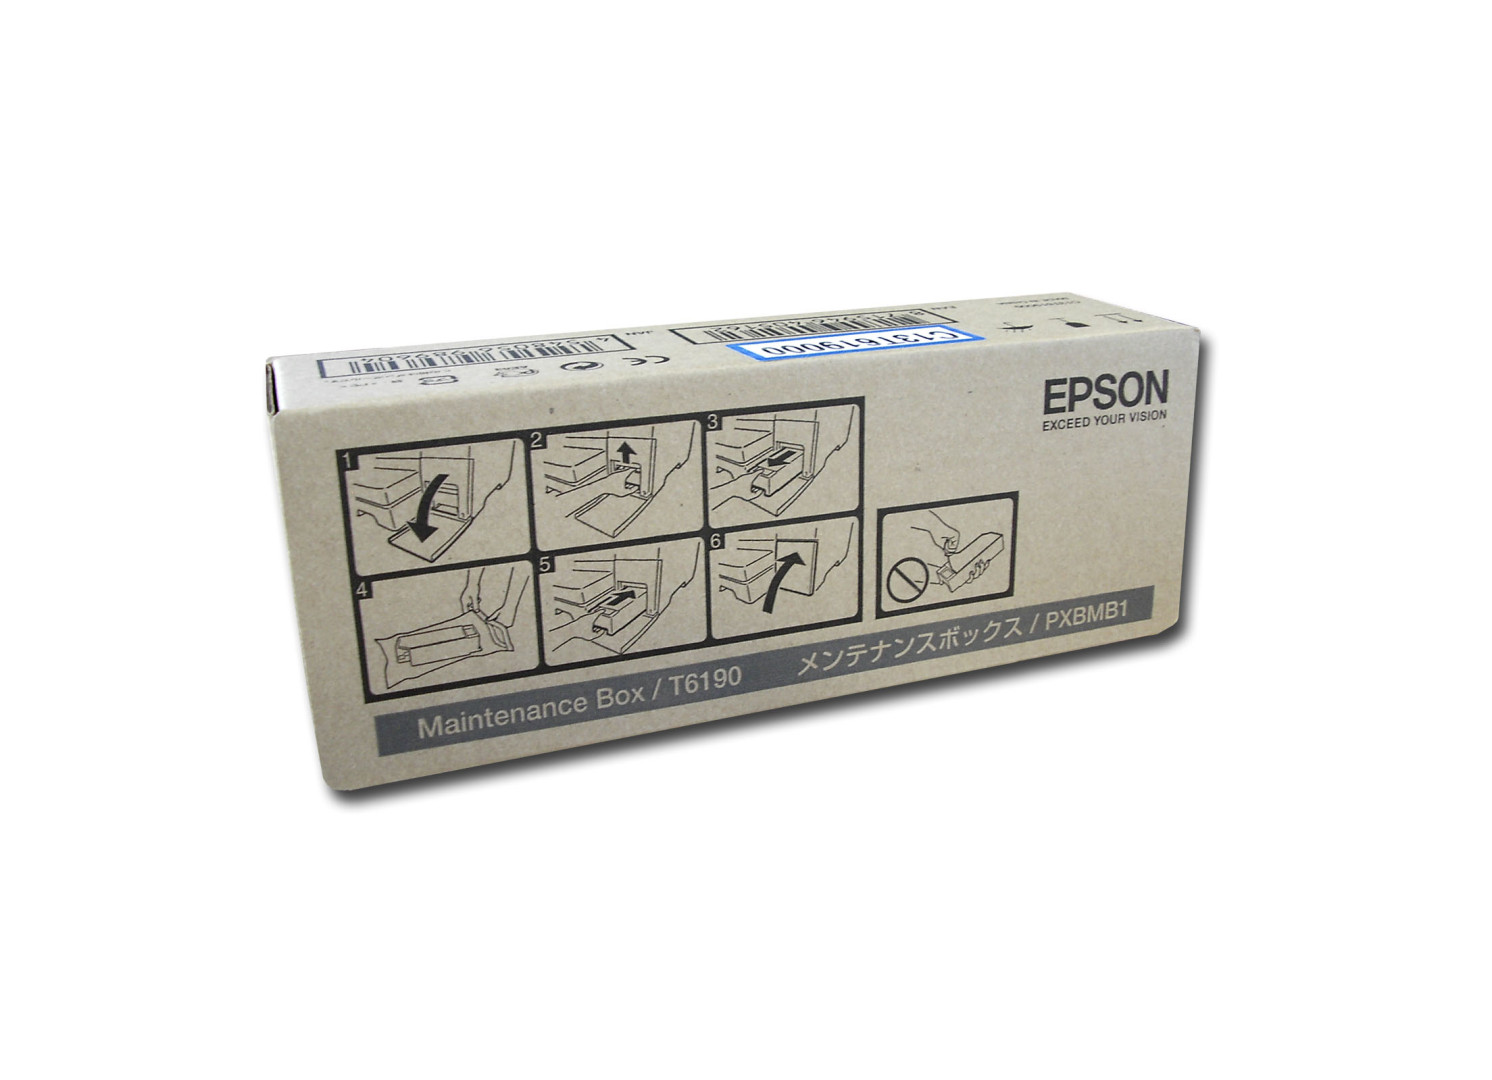 Epson Maintenance box